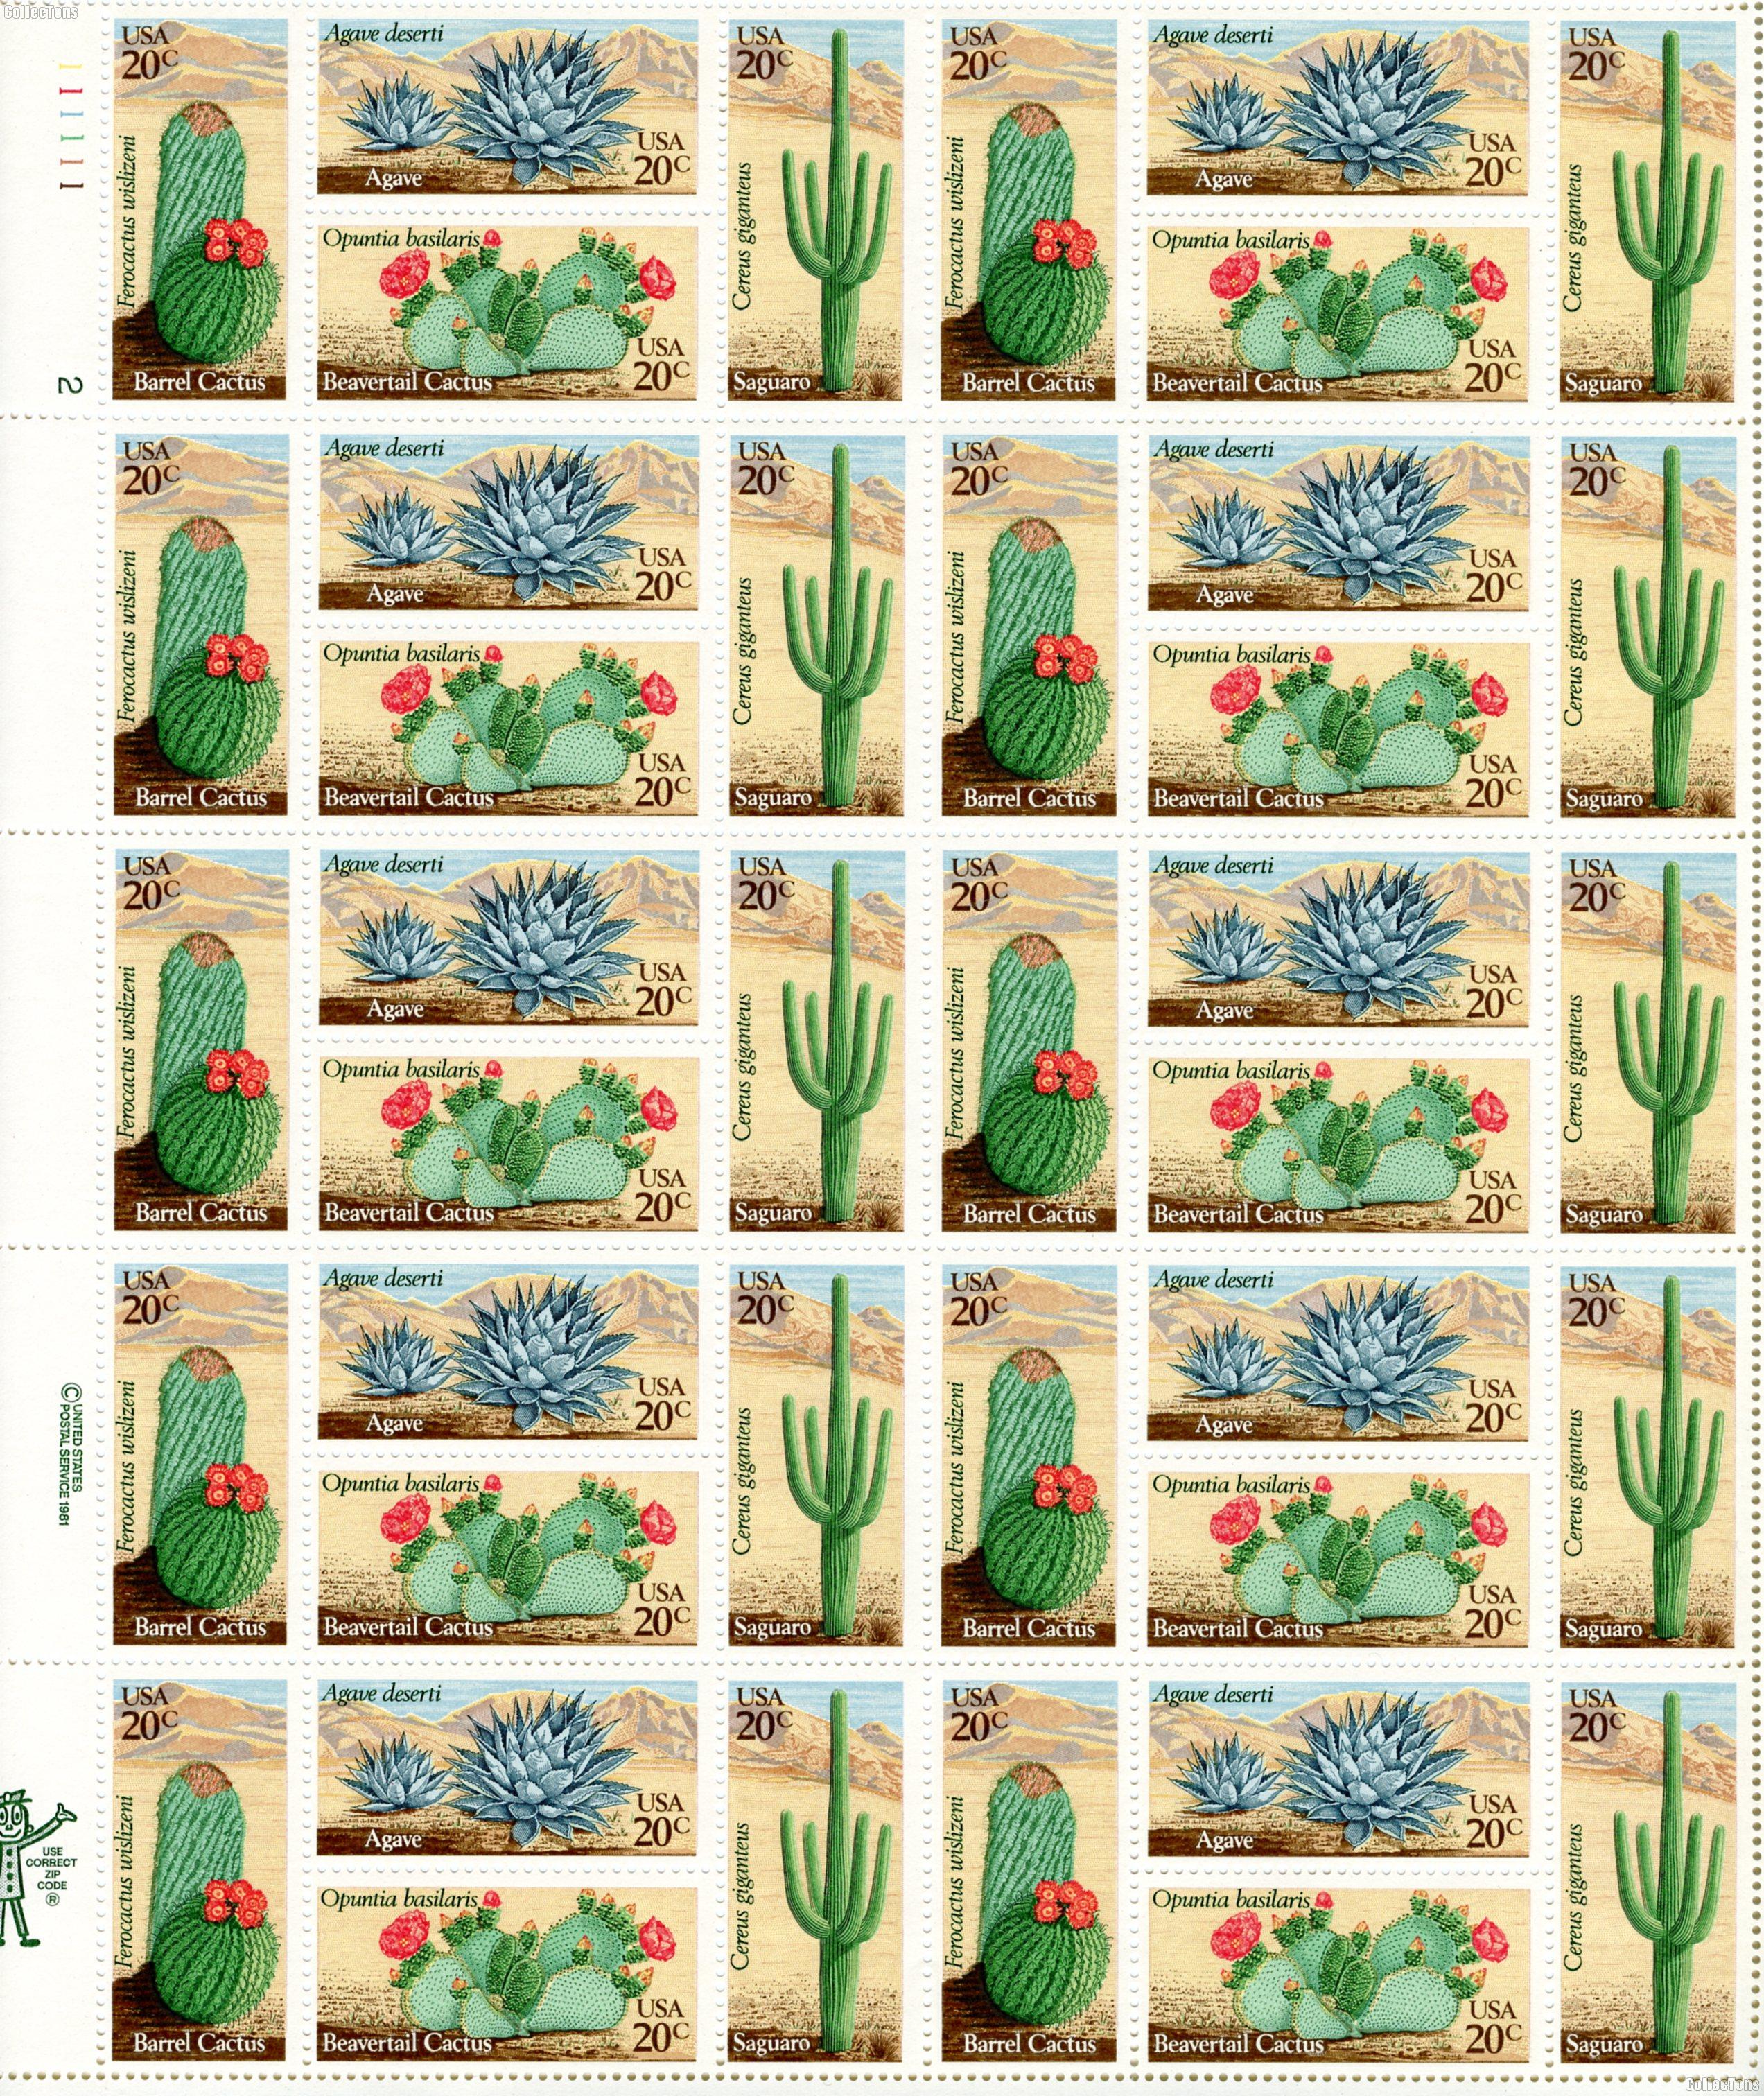 1981 Desert Plants 20 Cent US Postage Stamp MNH Sheet of 50 Scott #1942-1945